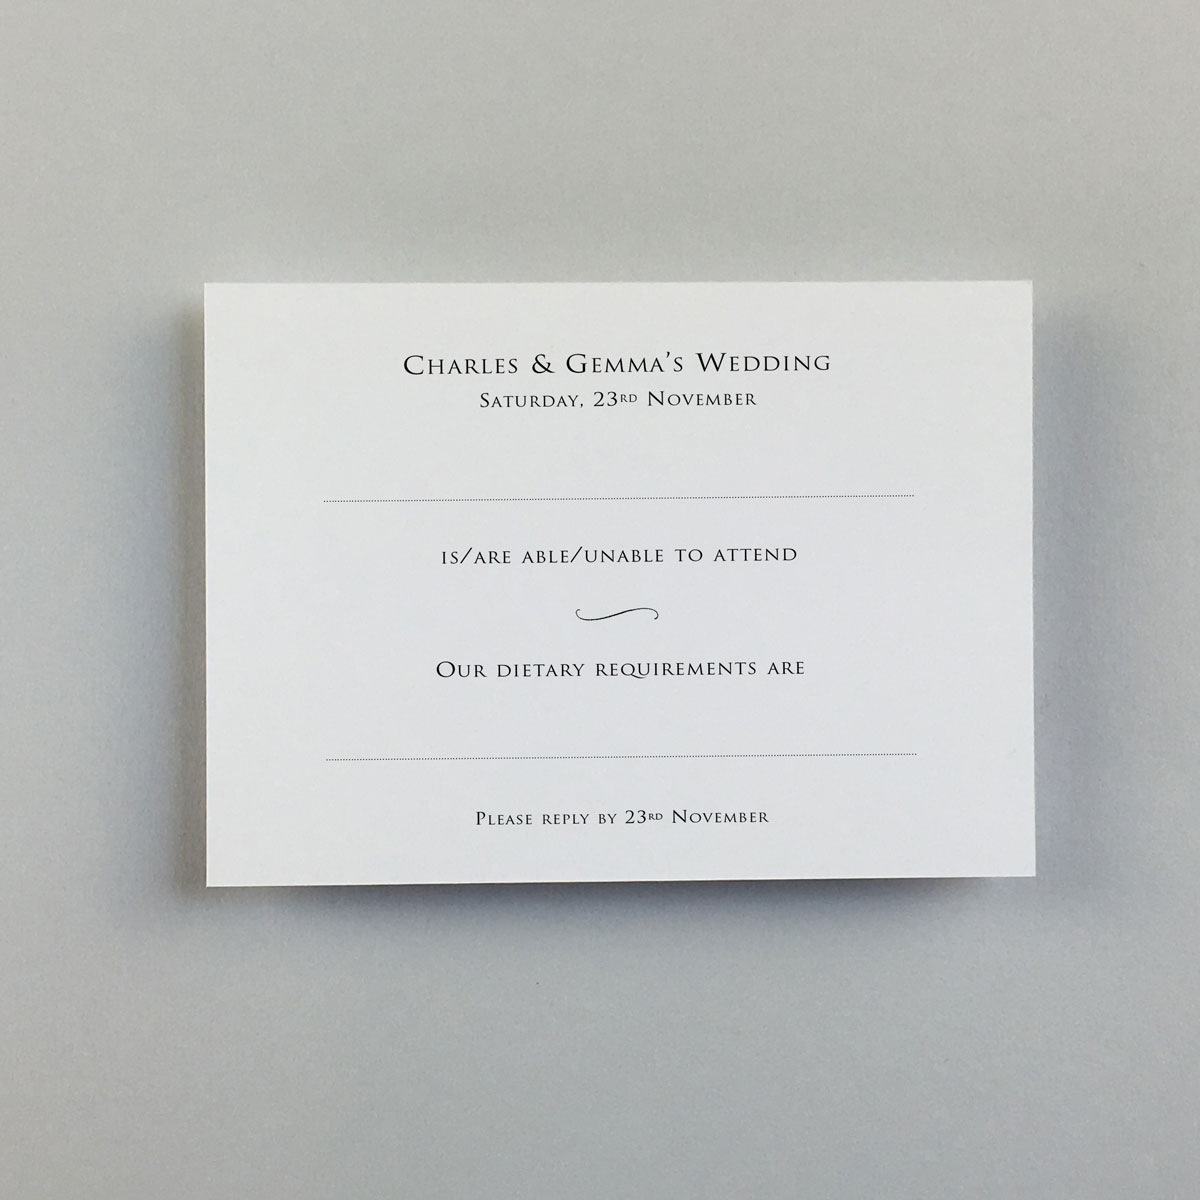 Gemma Reply Cards - Wedding Stationery